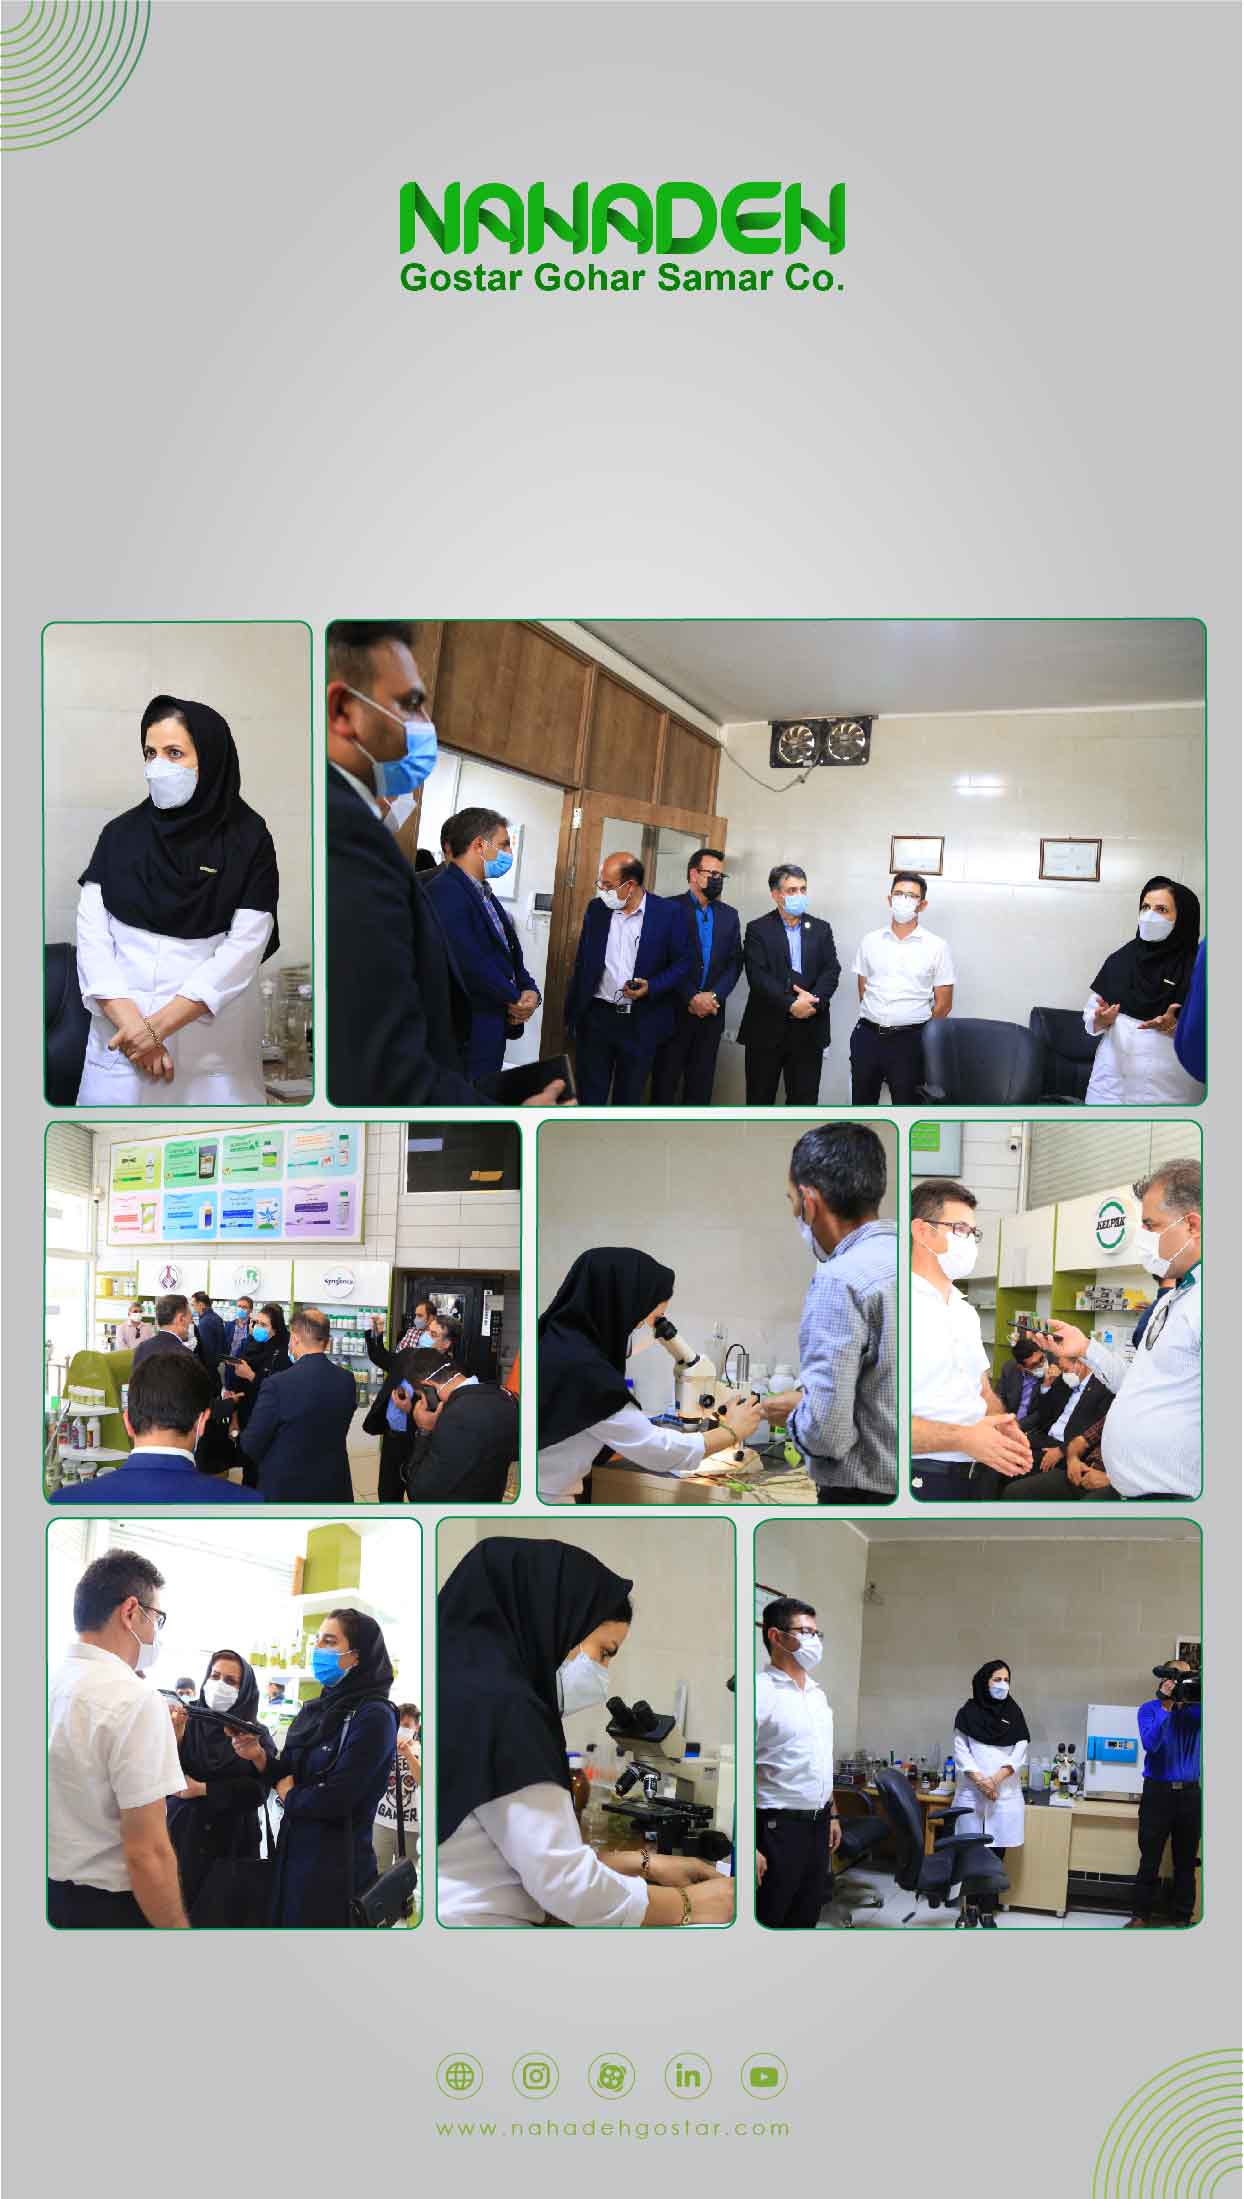 Opening of the herbal medicine clinic of Nahadeh Gostar Gohar Samar company (3)